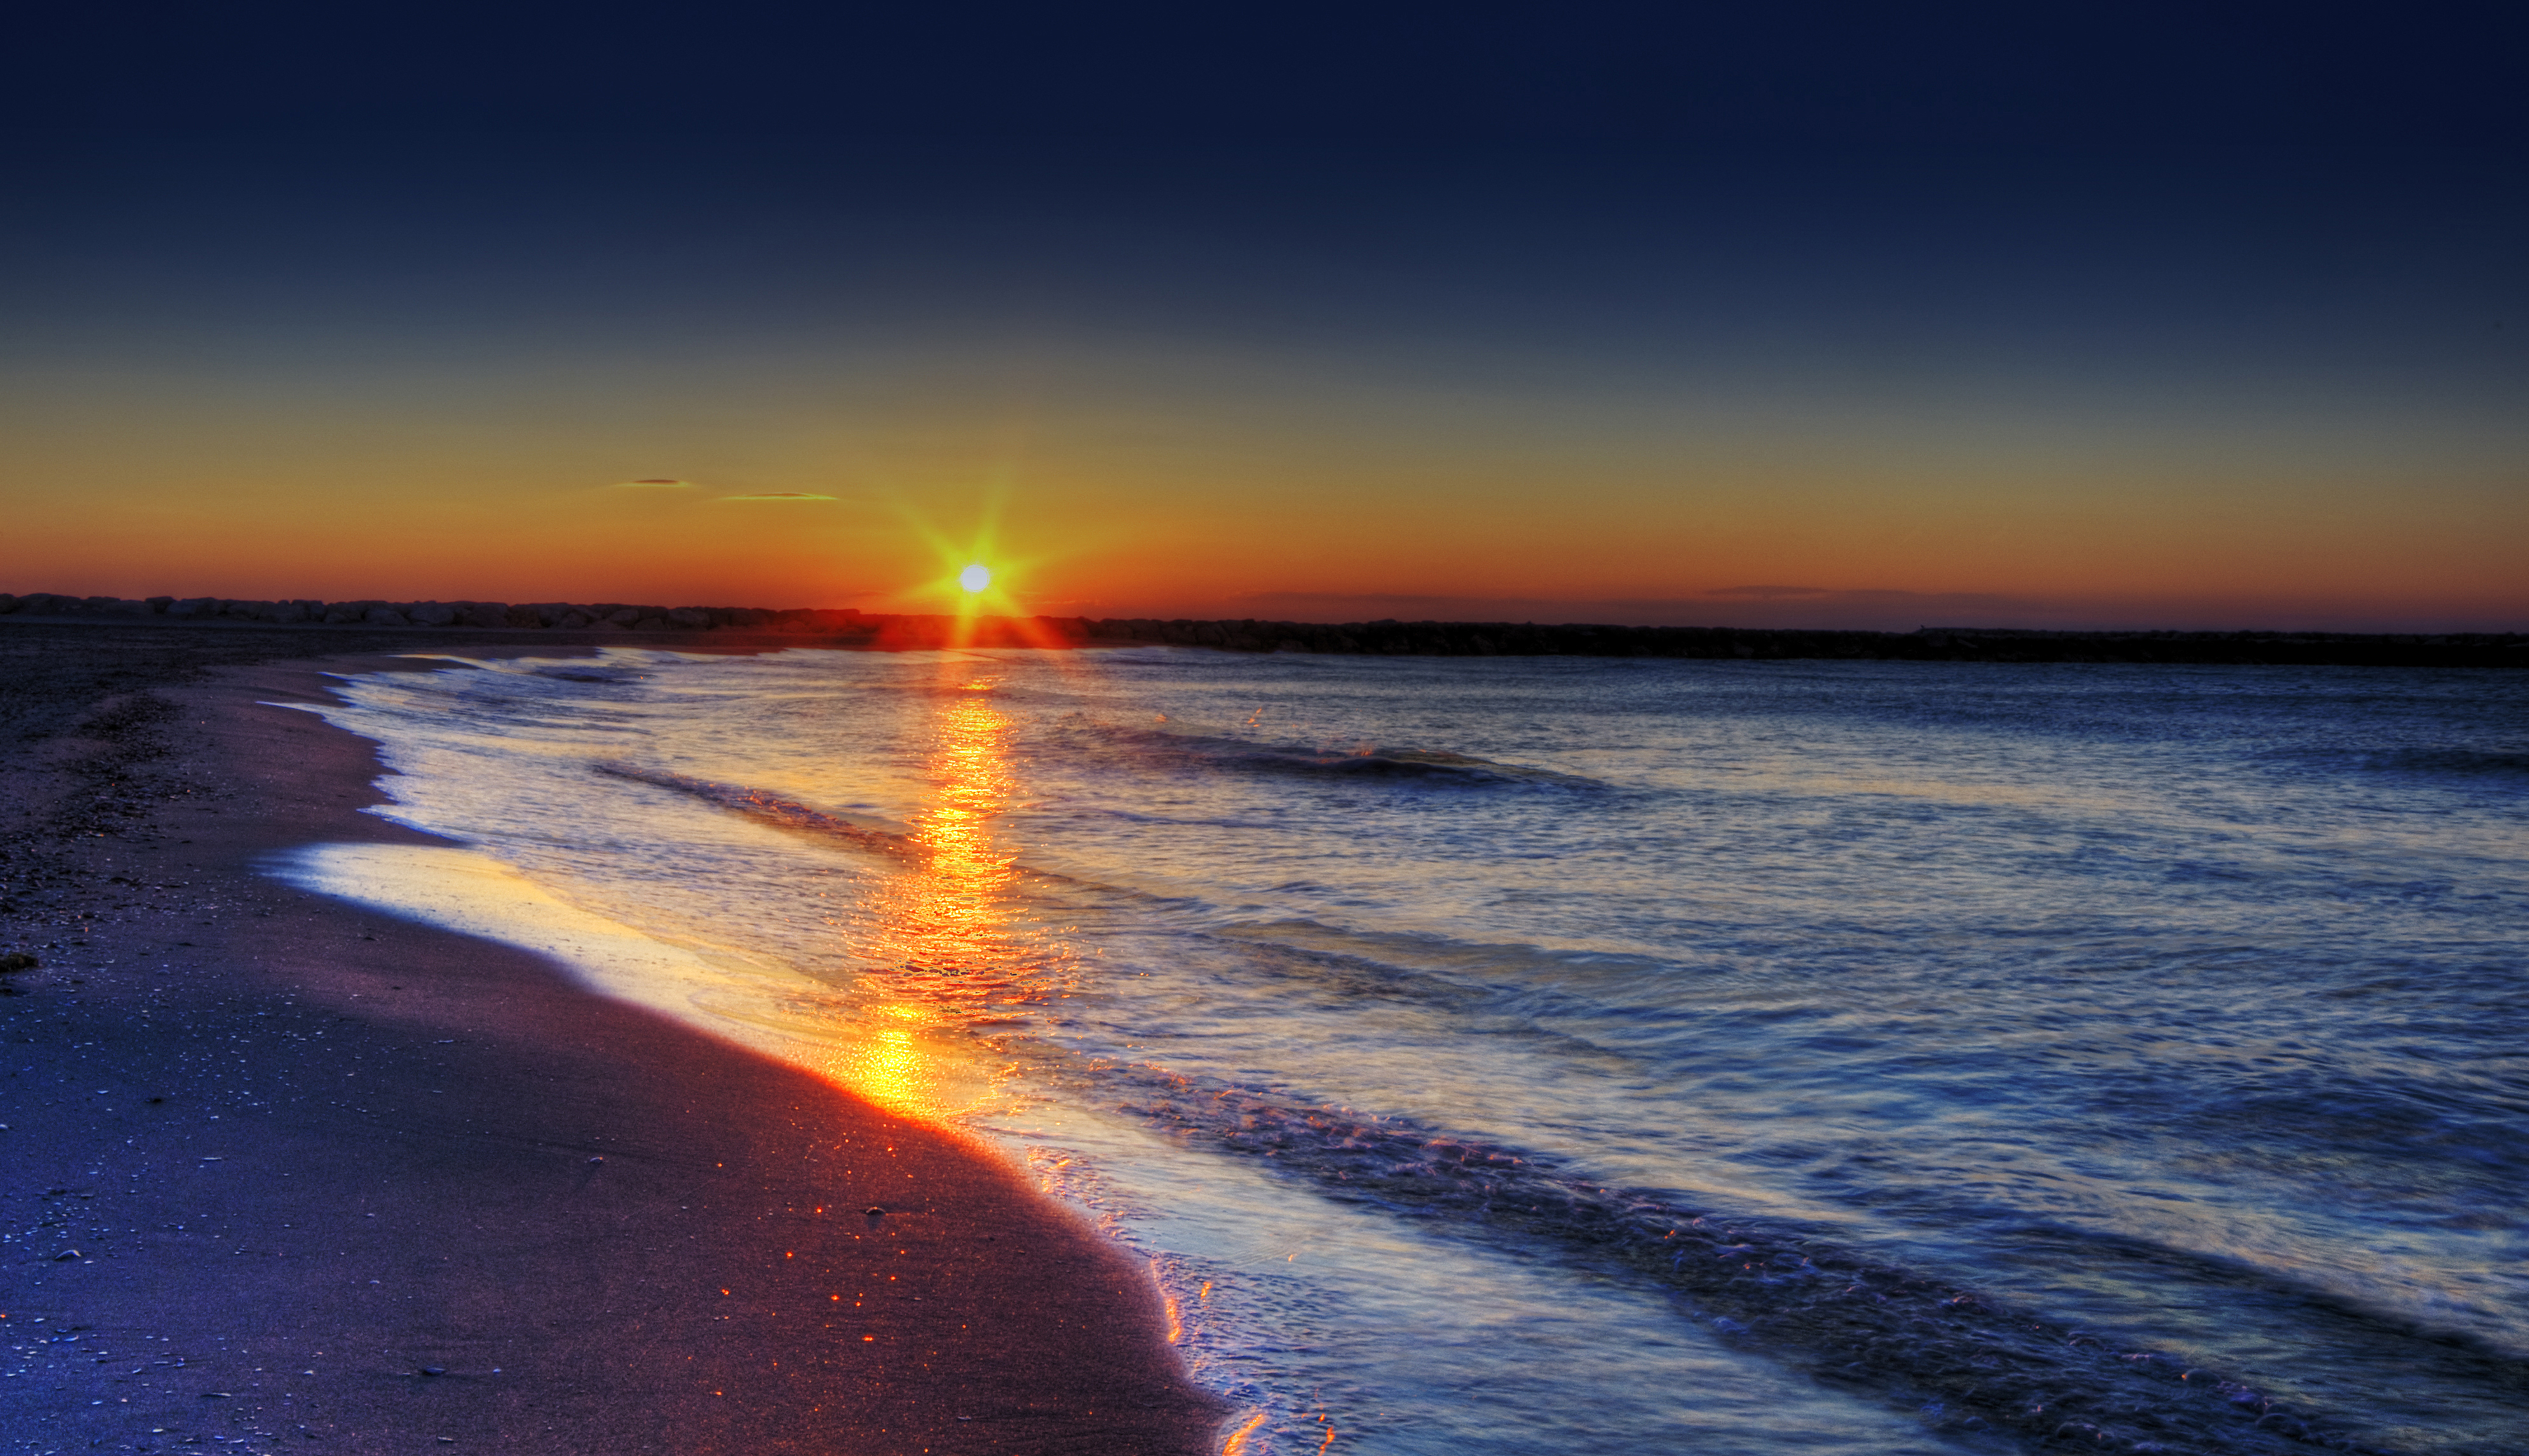 File:Sunrise on the Beach.jpg - Wikimedia Commons